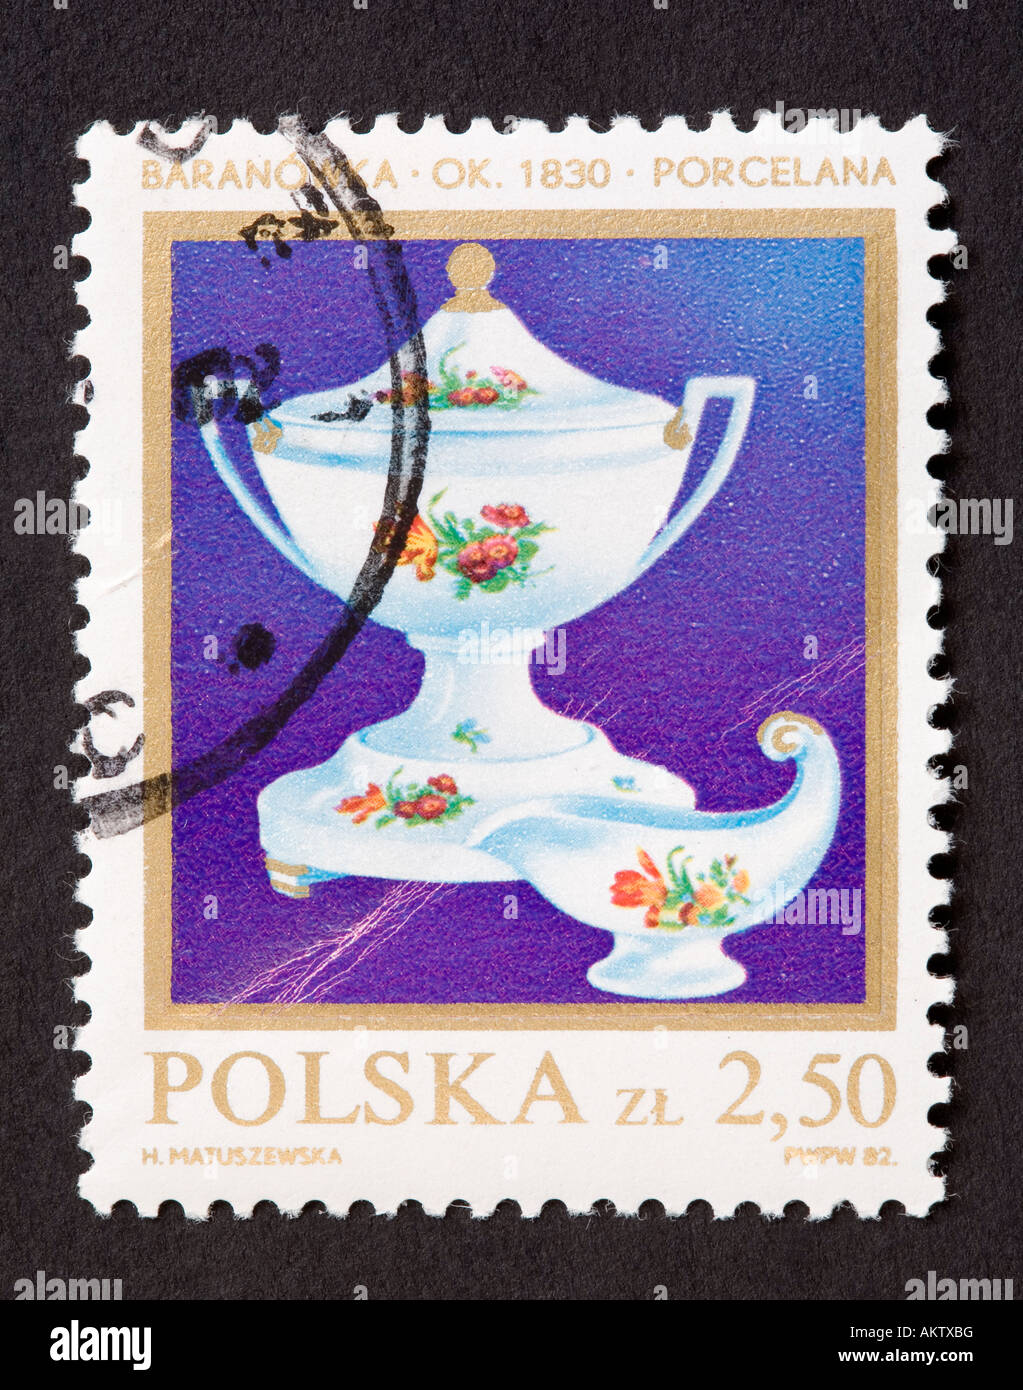 Polish postage stamp Stock Photo